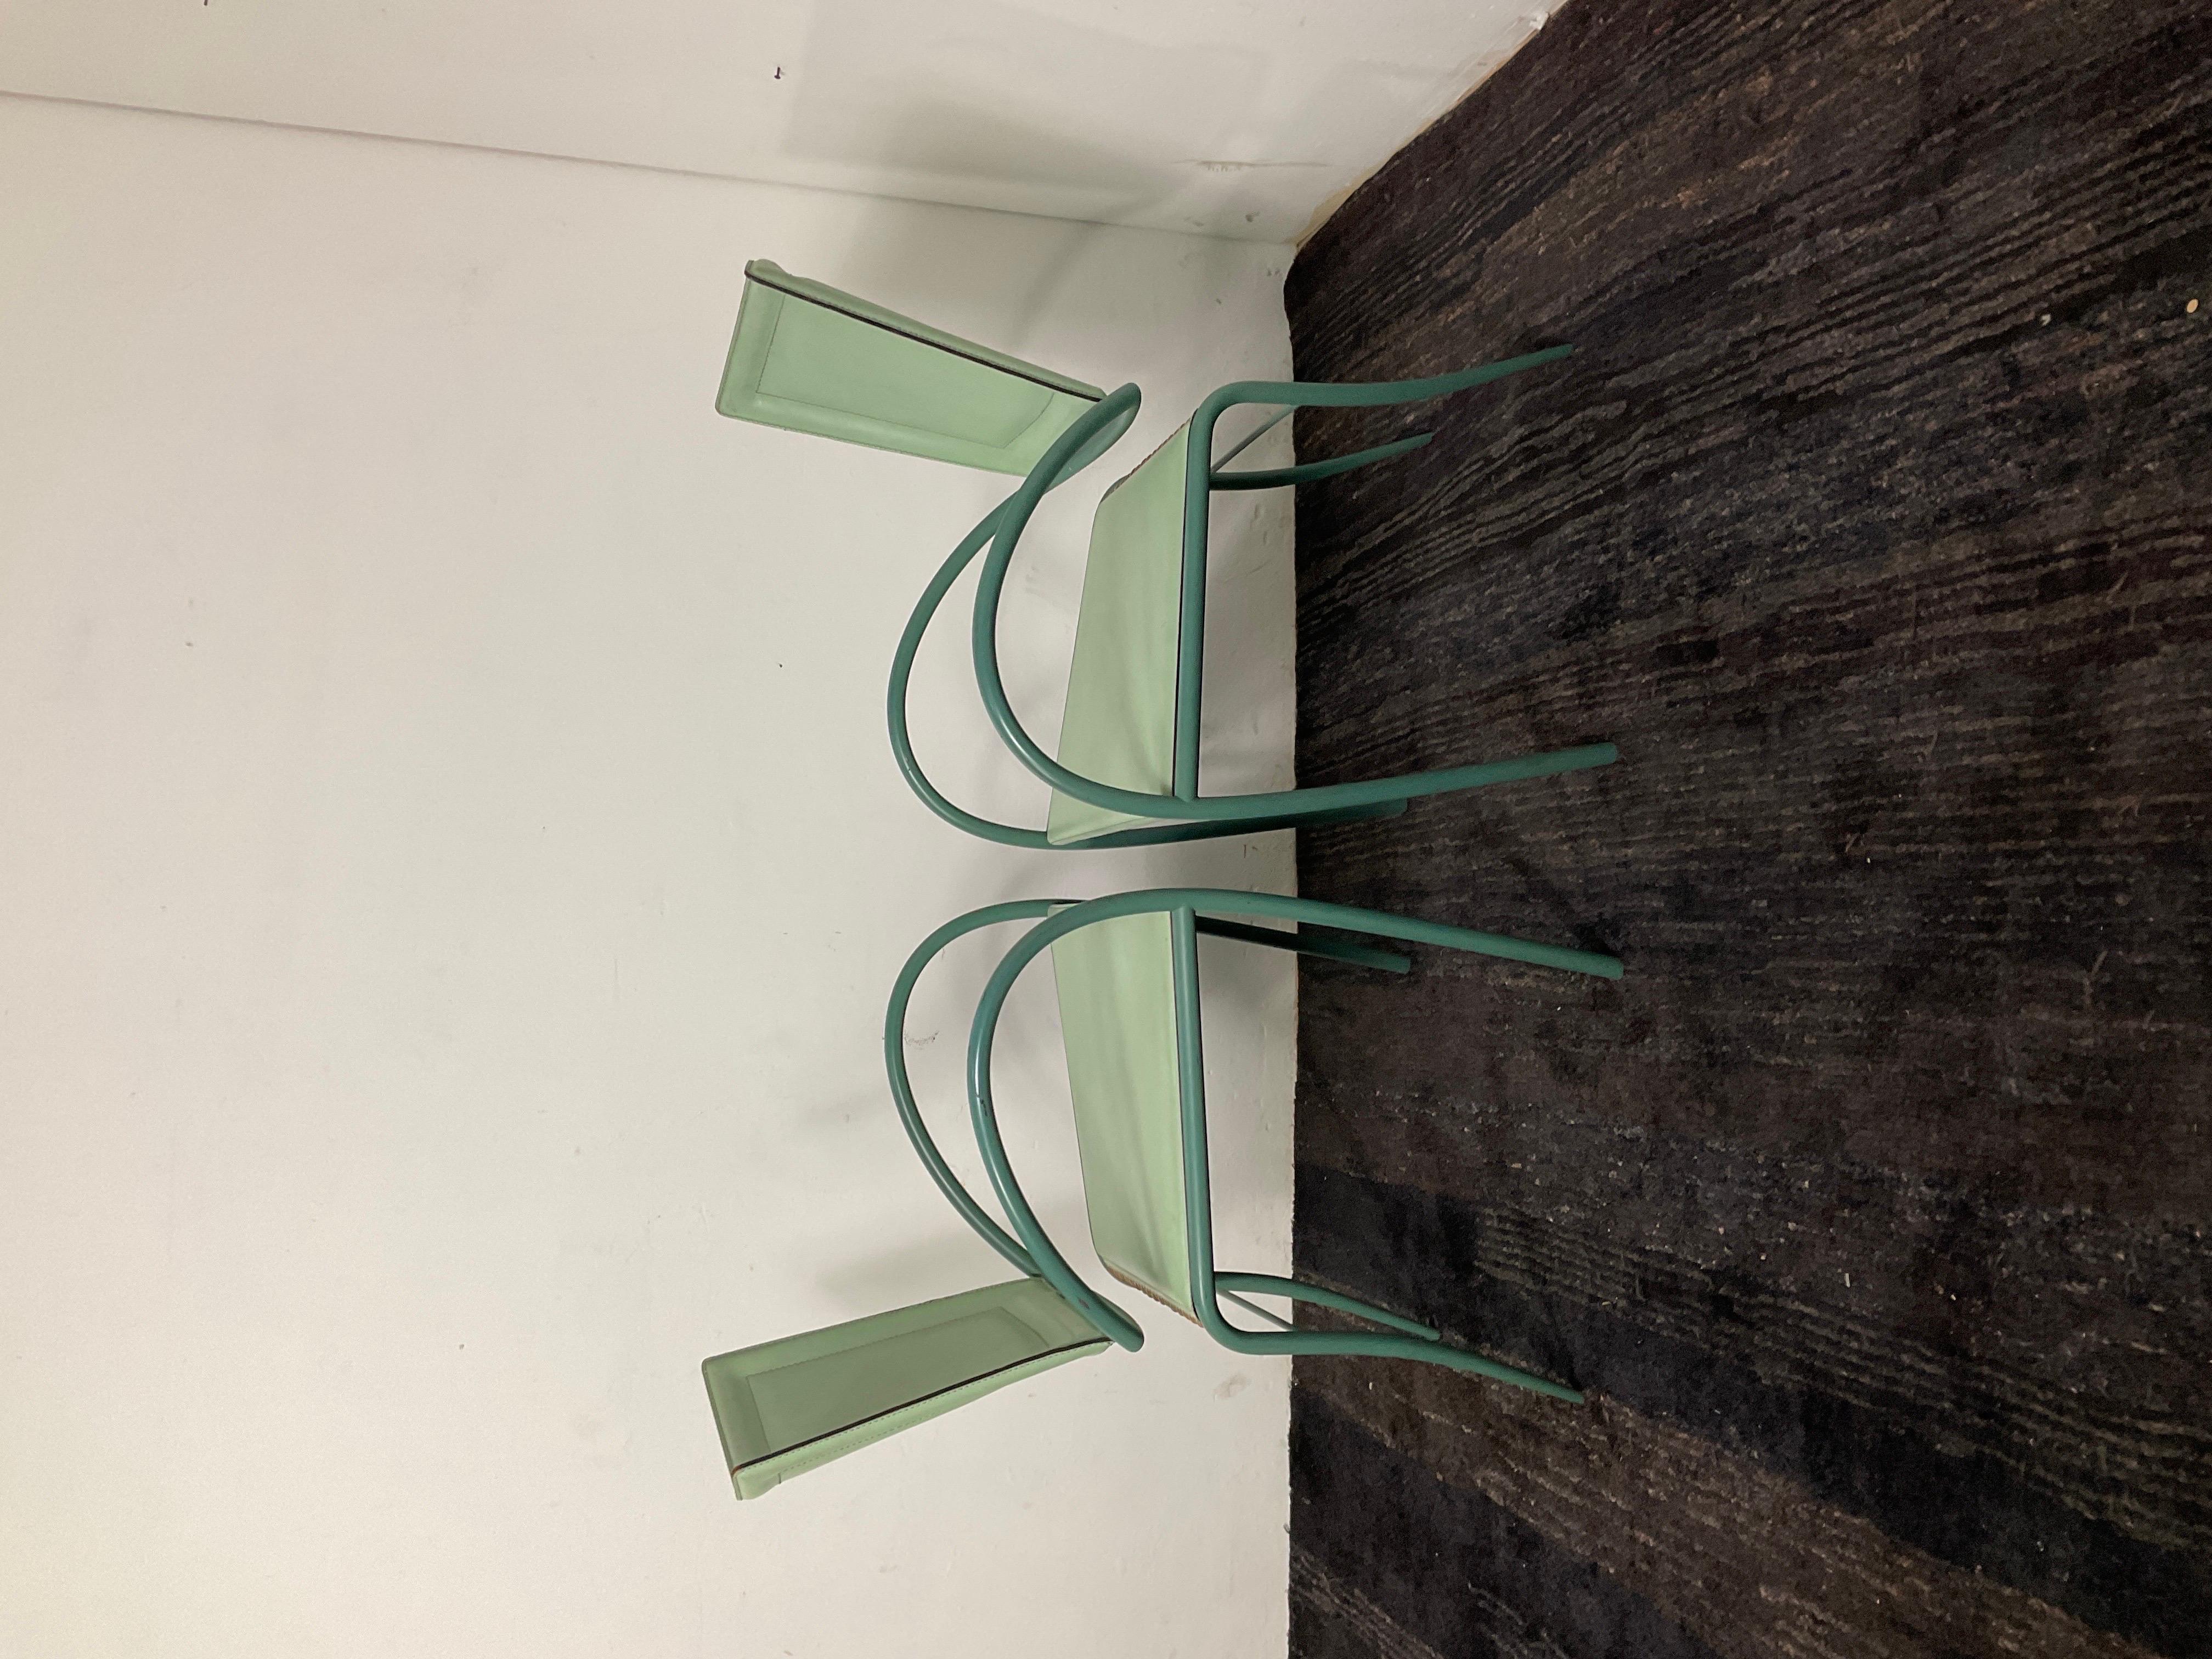 Italian Iron and Leather Chairs by Sawaya & Moroni - a Pair 1